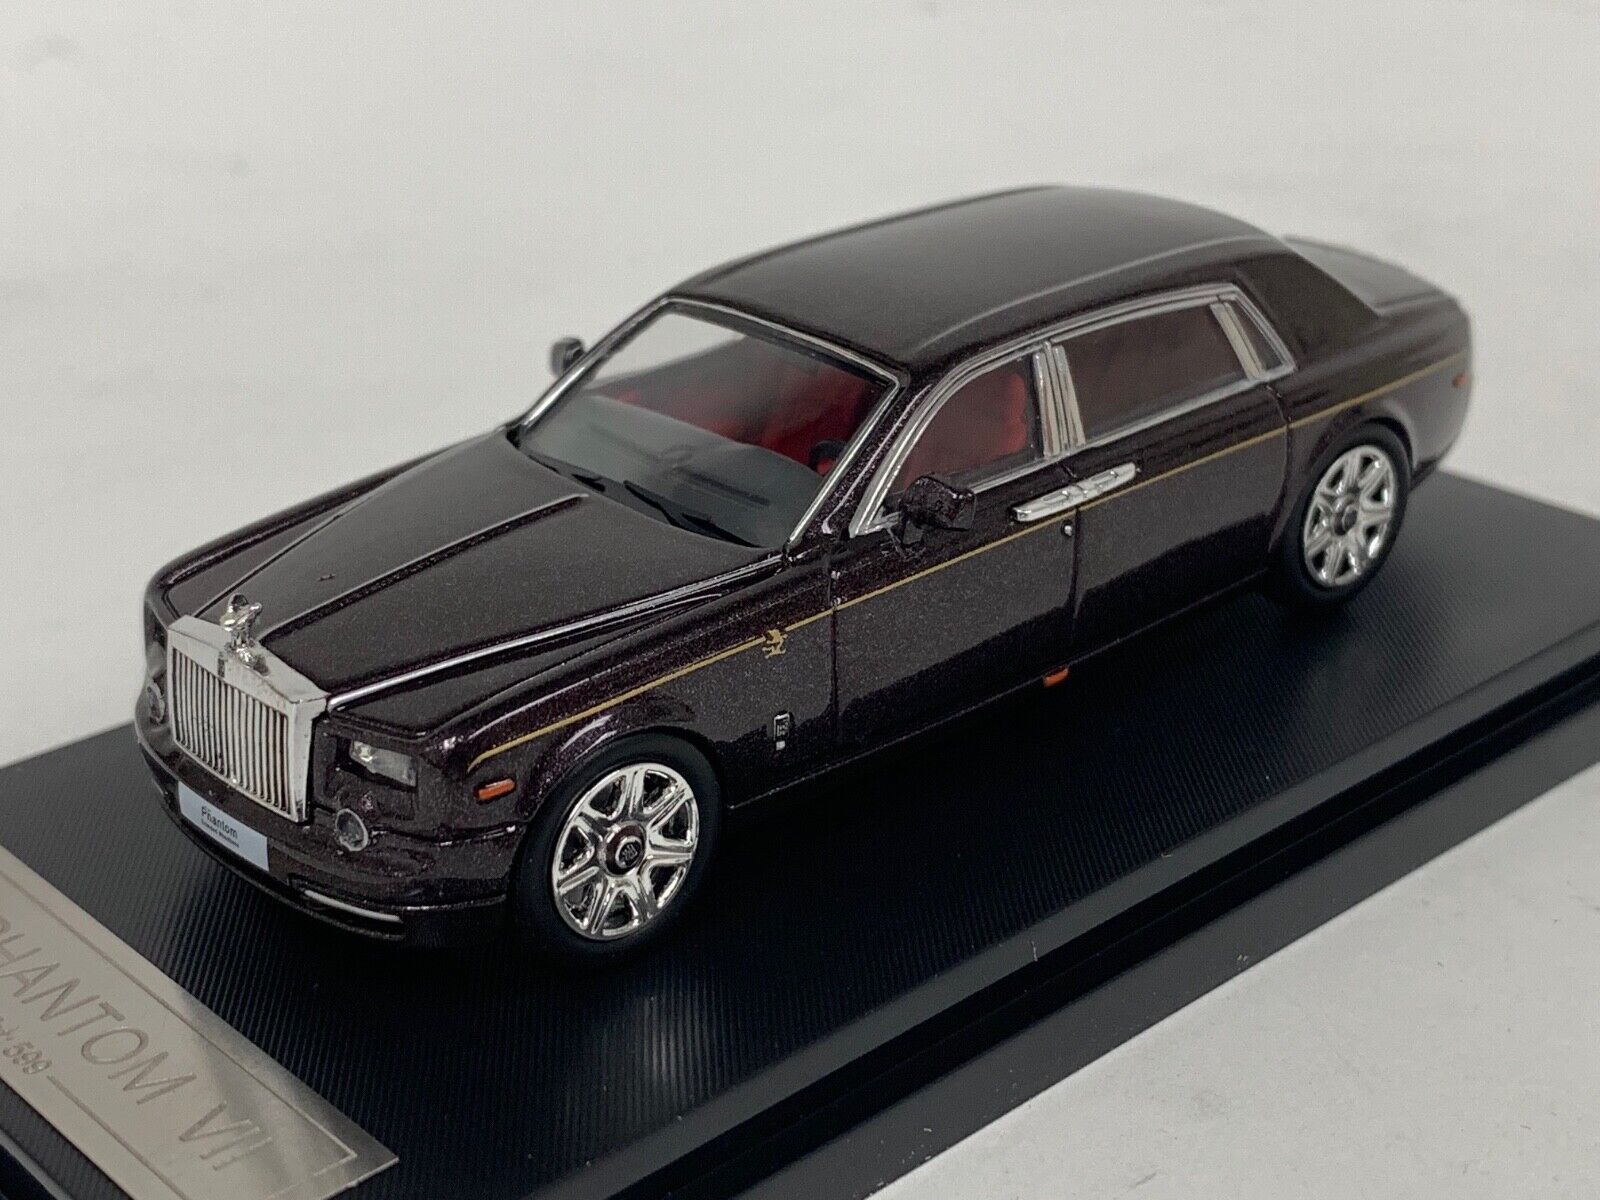 1/64 Rolls Royce Phantom VII Dragon Edition in Metallic Brown | eBay